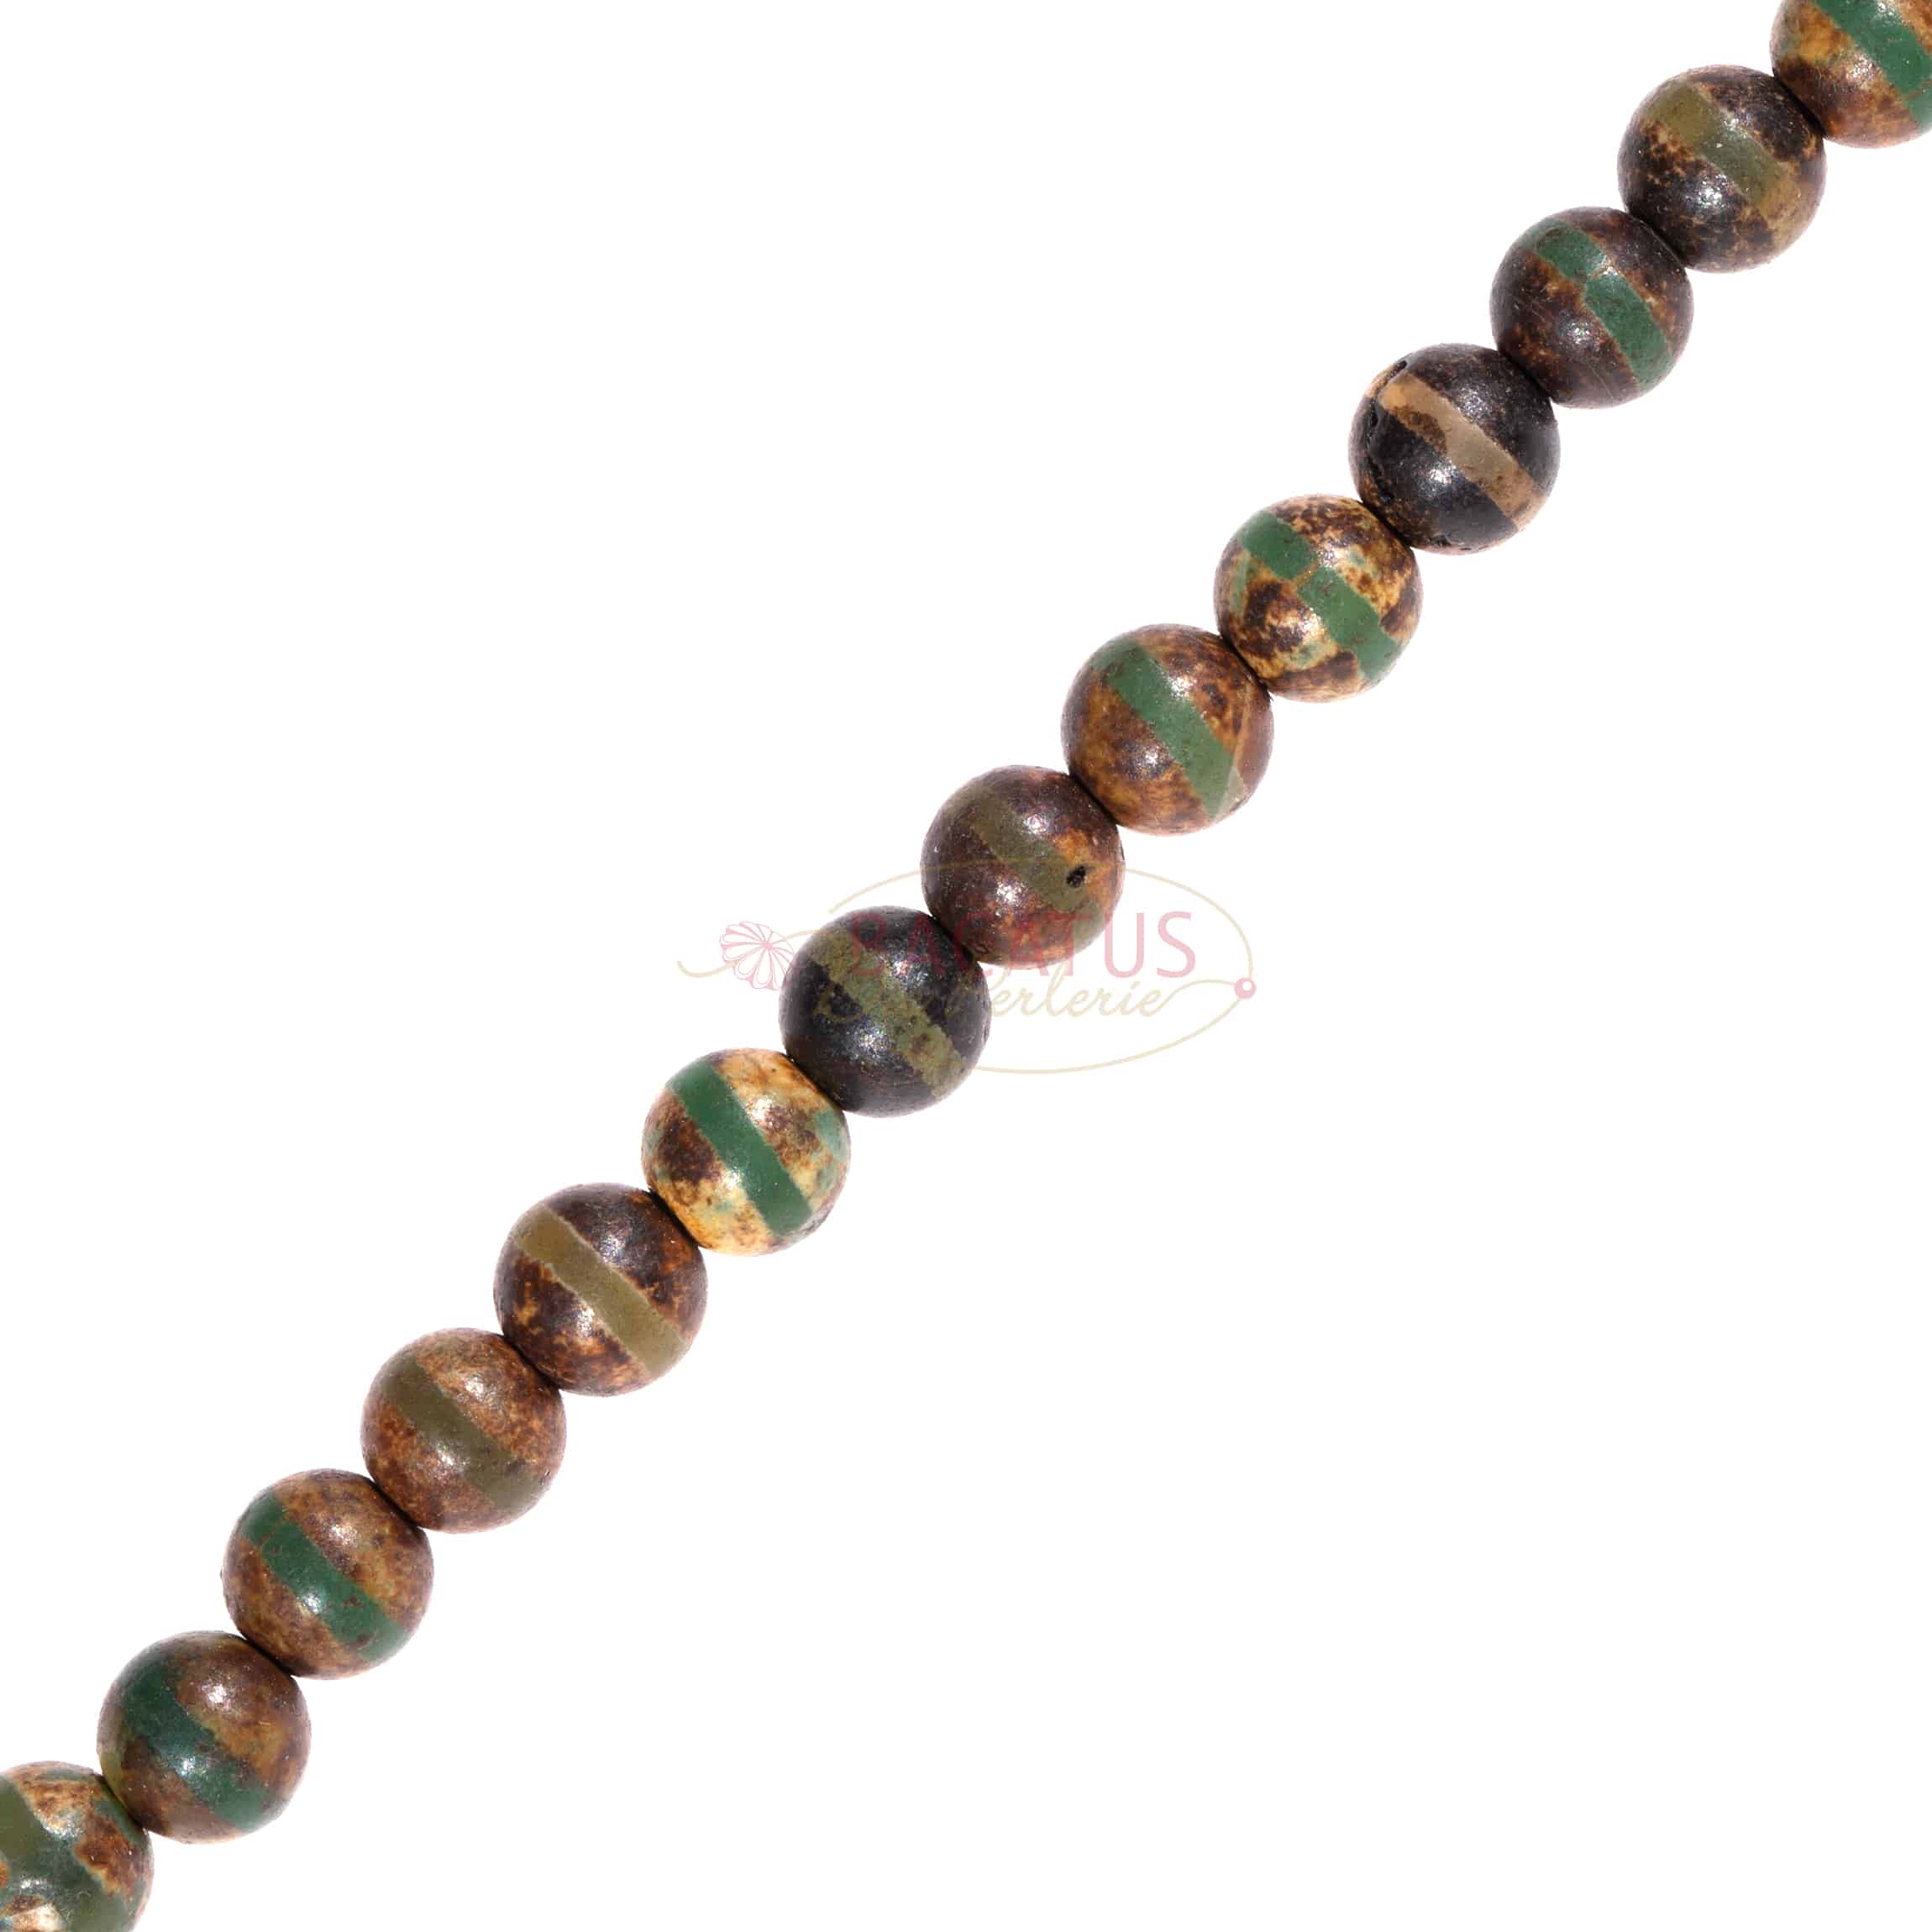 Tibetan agate plain round shiny brown with stripes 6mm, 1 strand